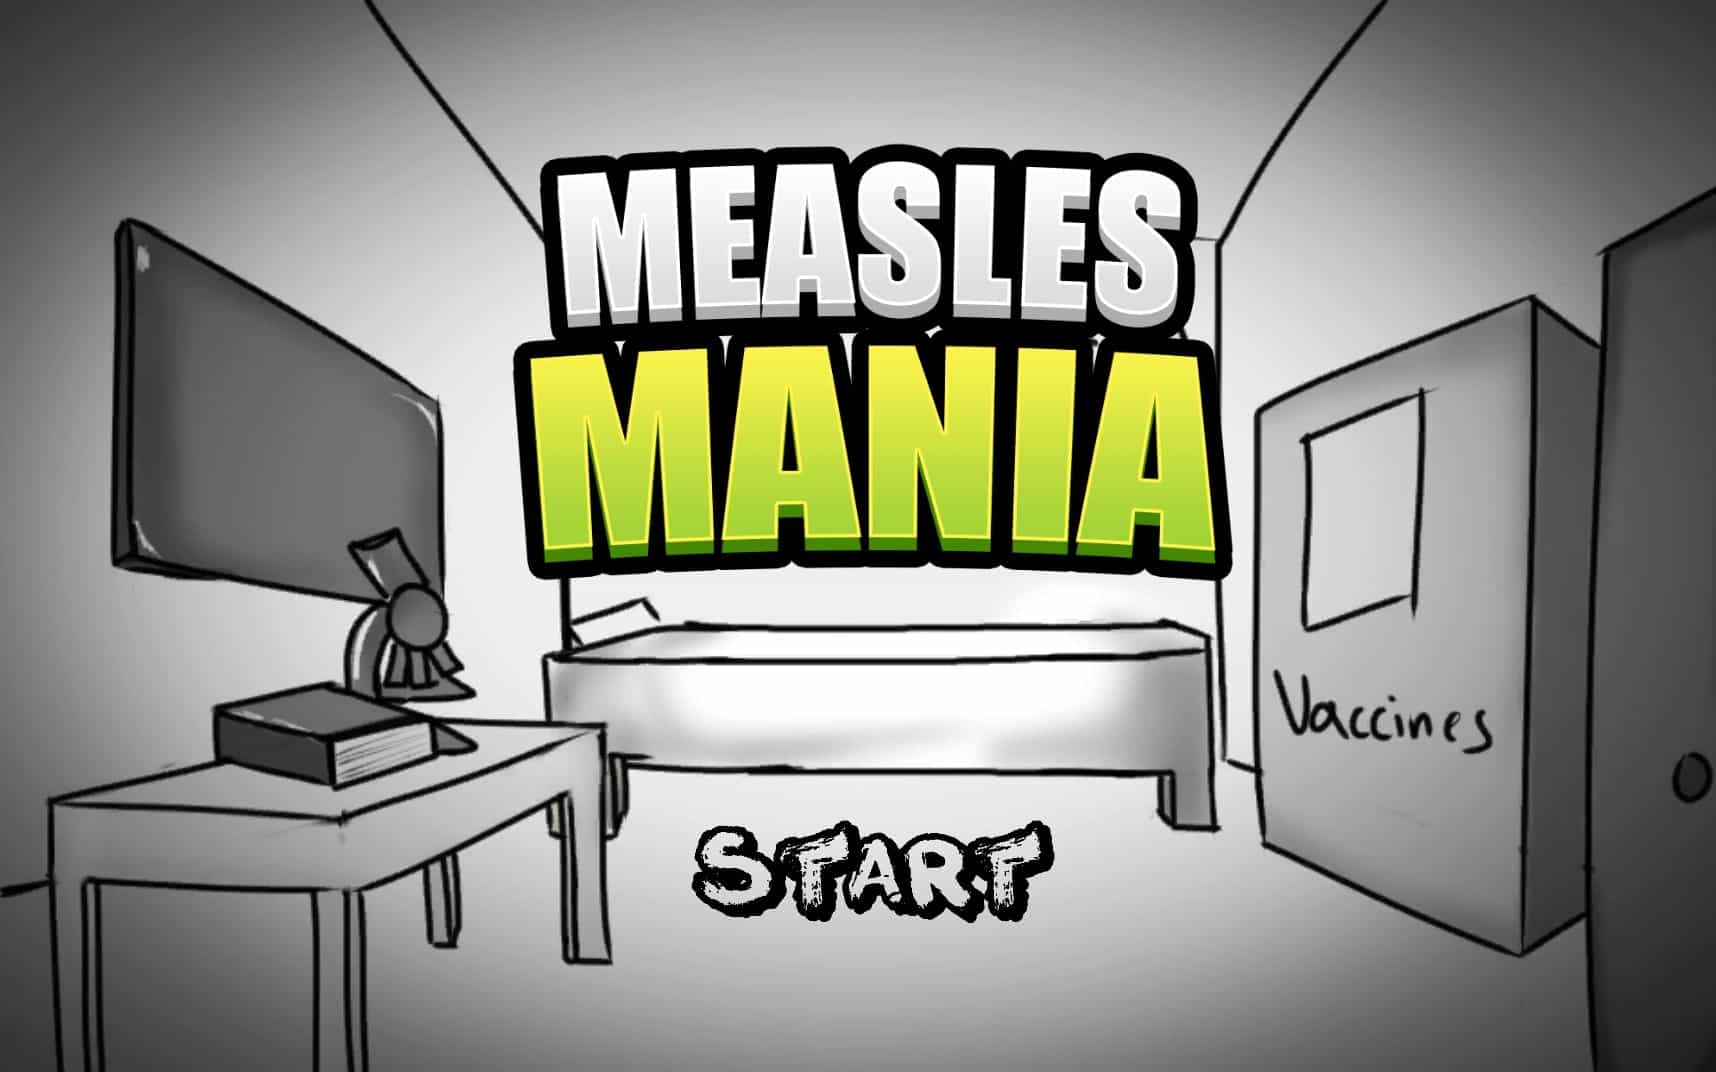 Measles Mania logo